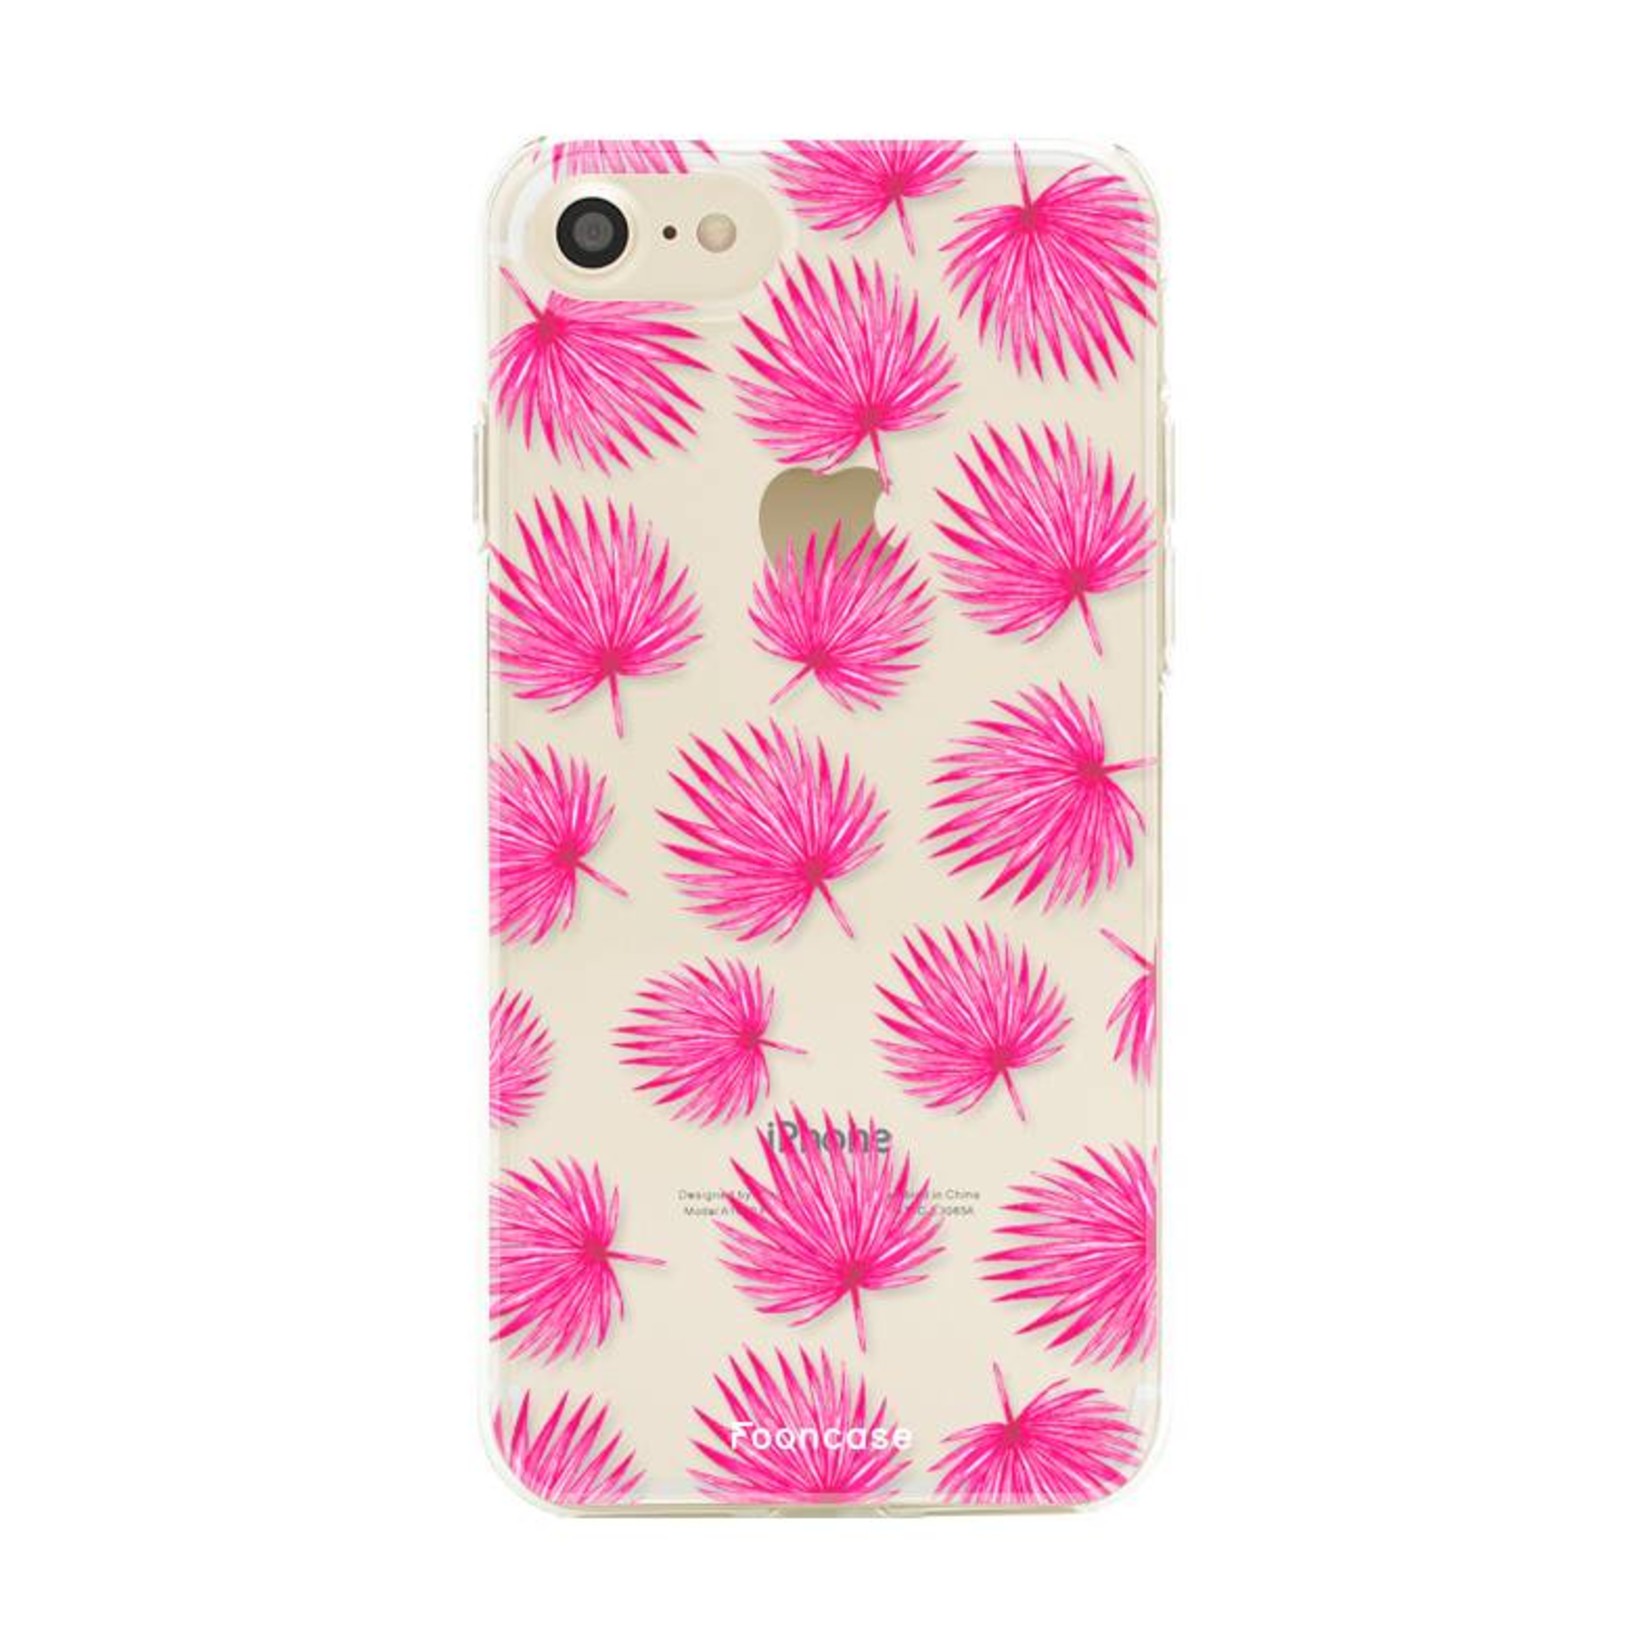 FOONCASE iPhone SE (2020) hoesje TPU Soft Case - Back Cover - Pink leaves / Roze bladeren